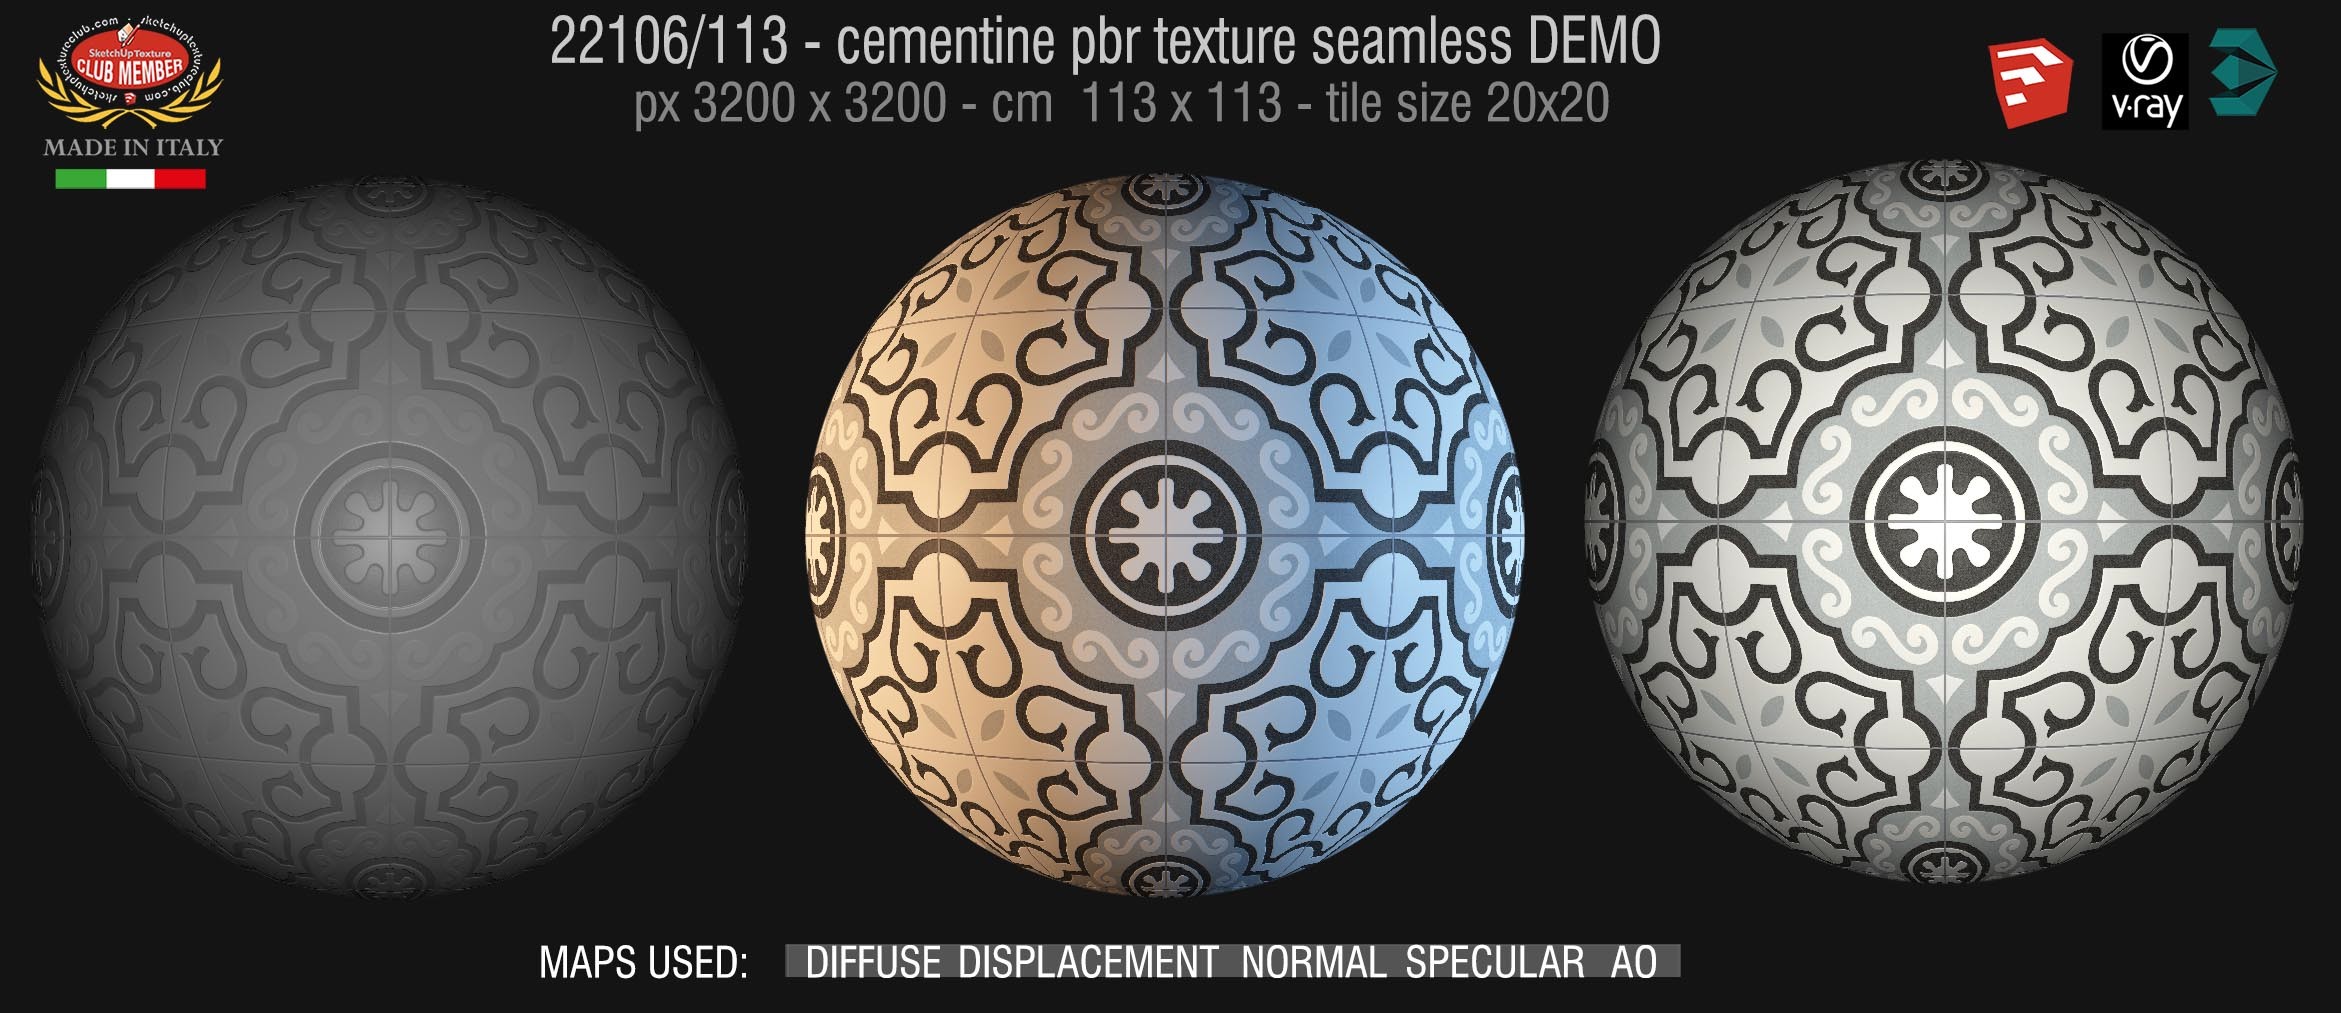 22106/113 cementine tiles Pbr texture seamless DEMO - D_Segni Concrete Look by Marazzi